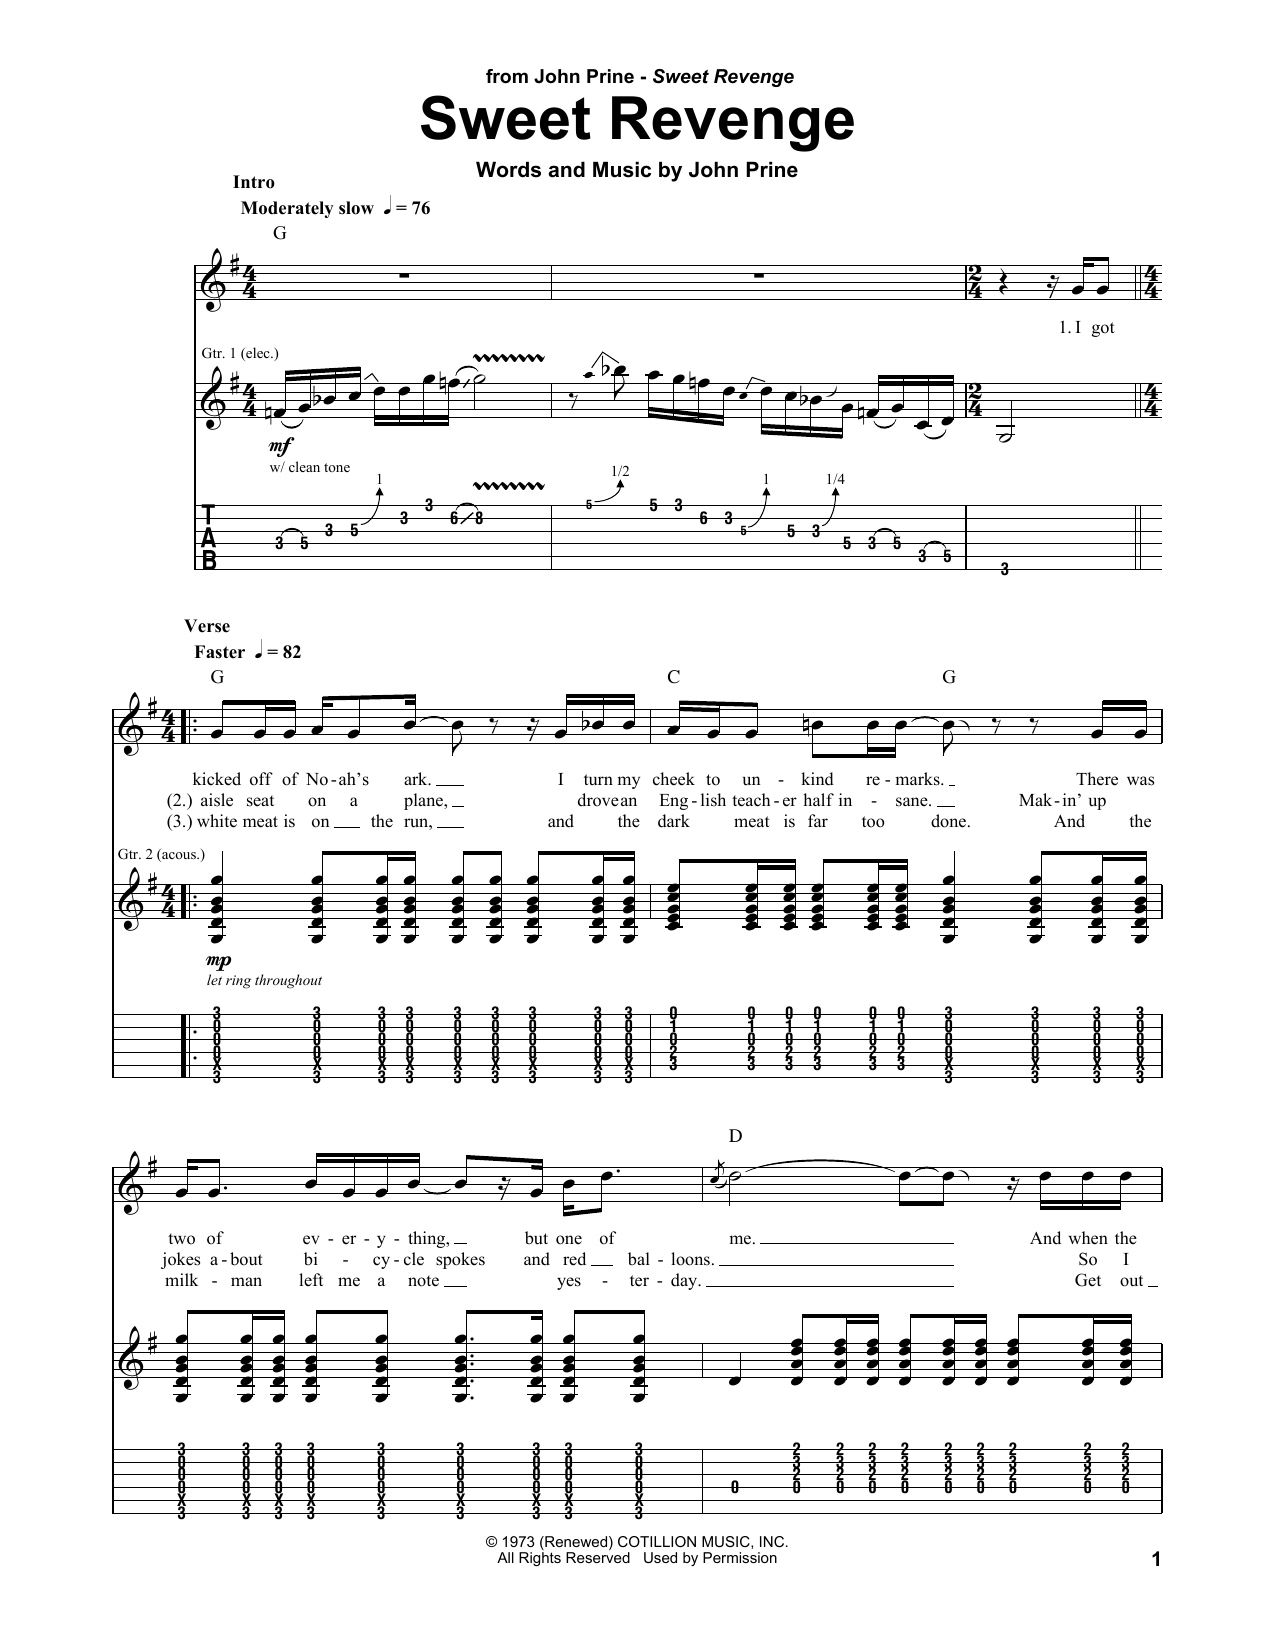 Download John Prine Sweet Revenge Sheet Music and learn how to play Ukulele PDF digital score in minutes